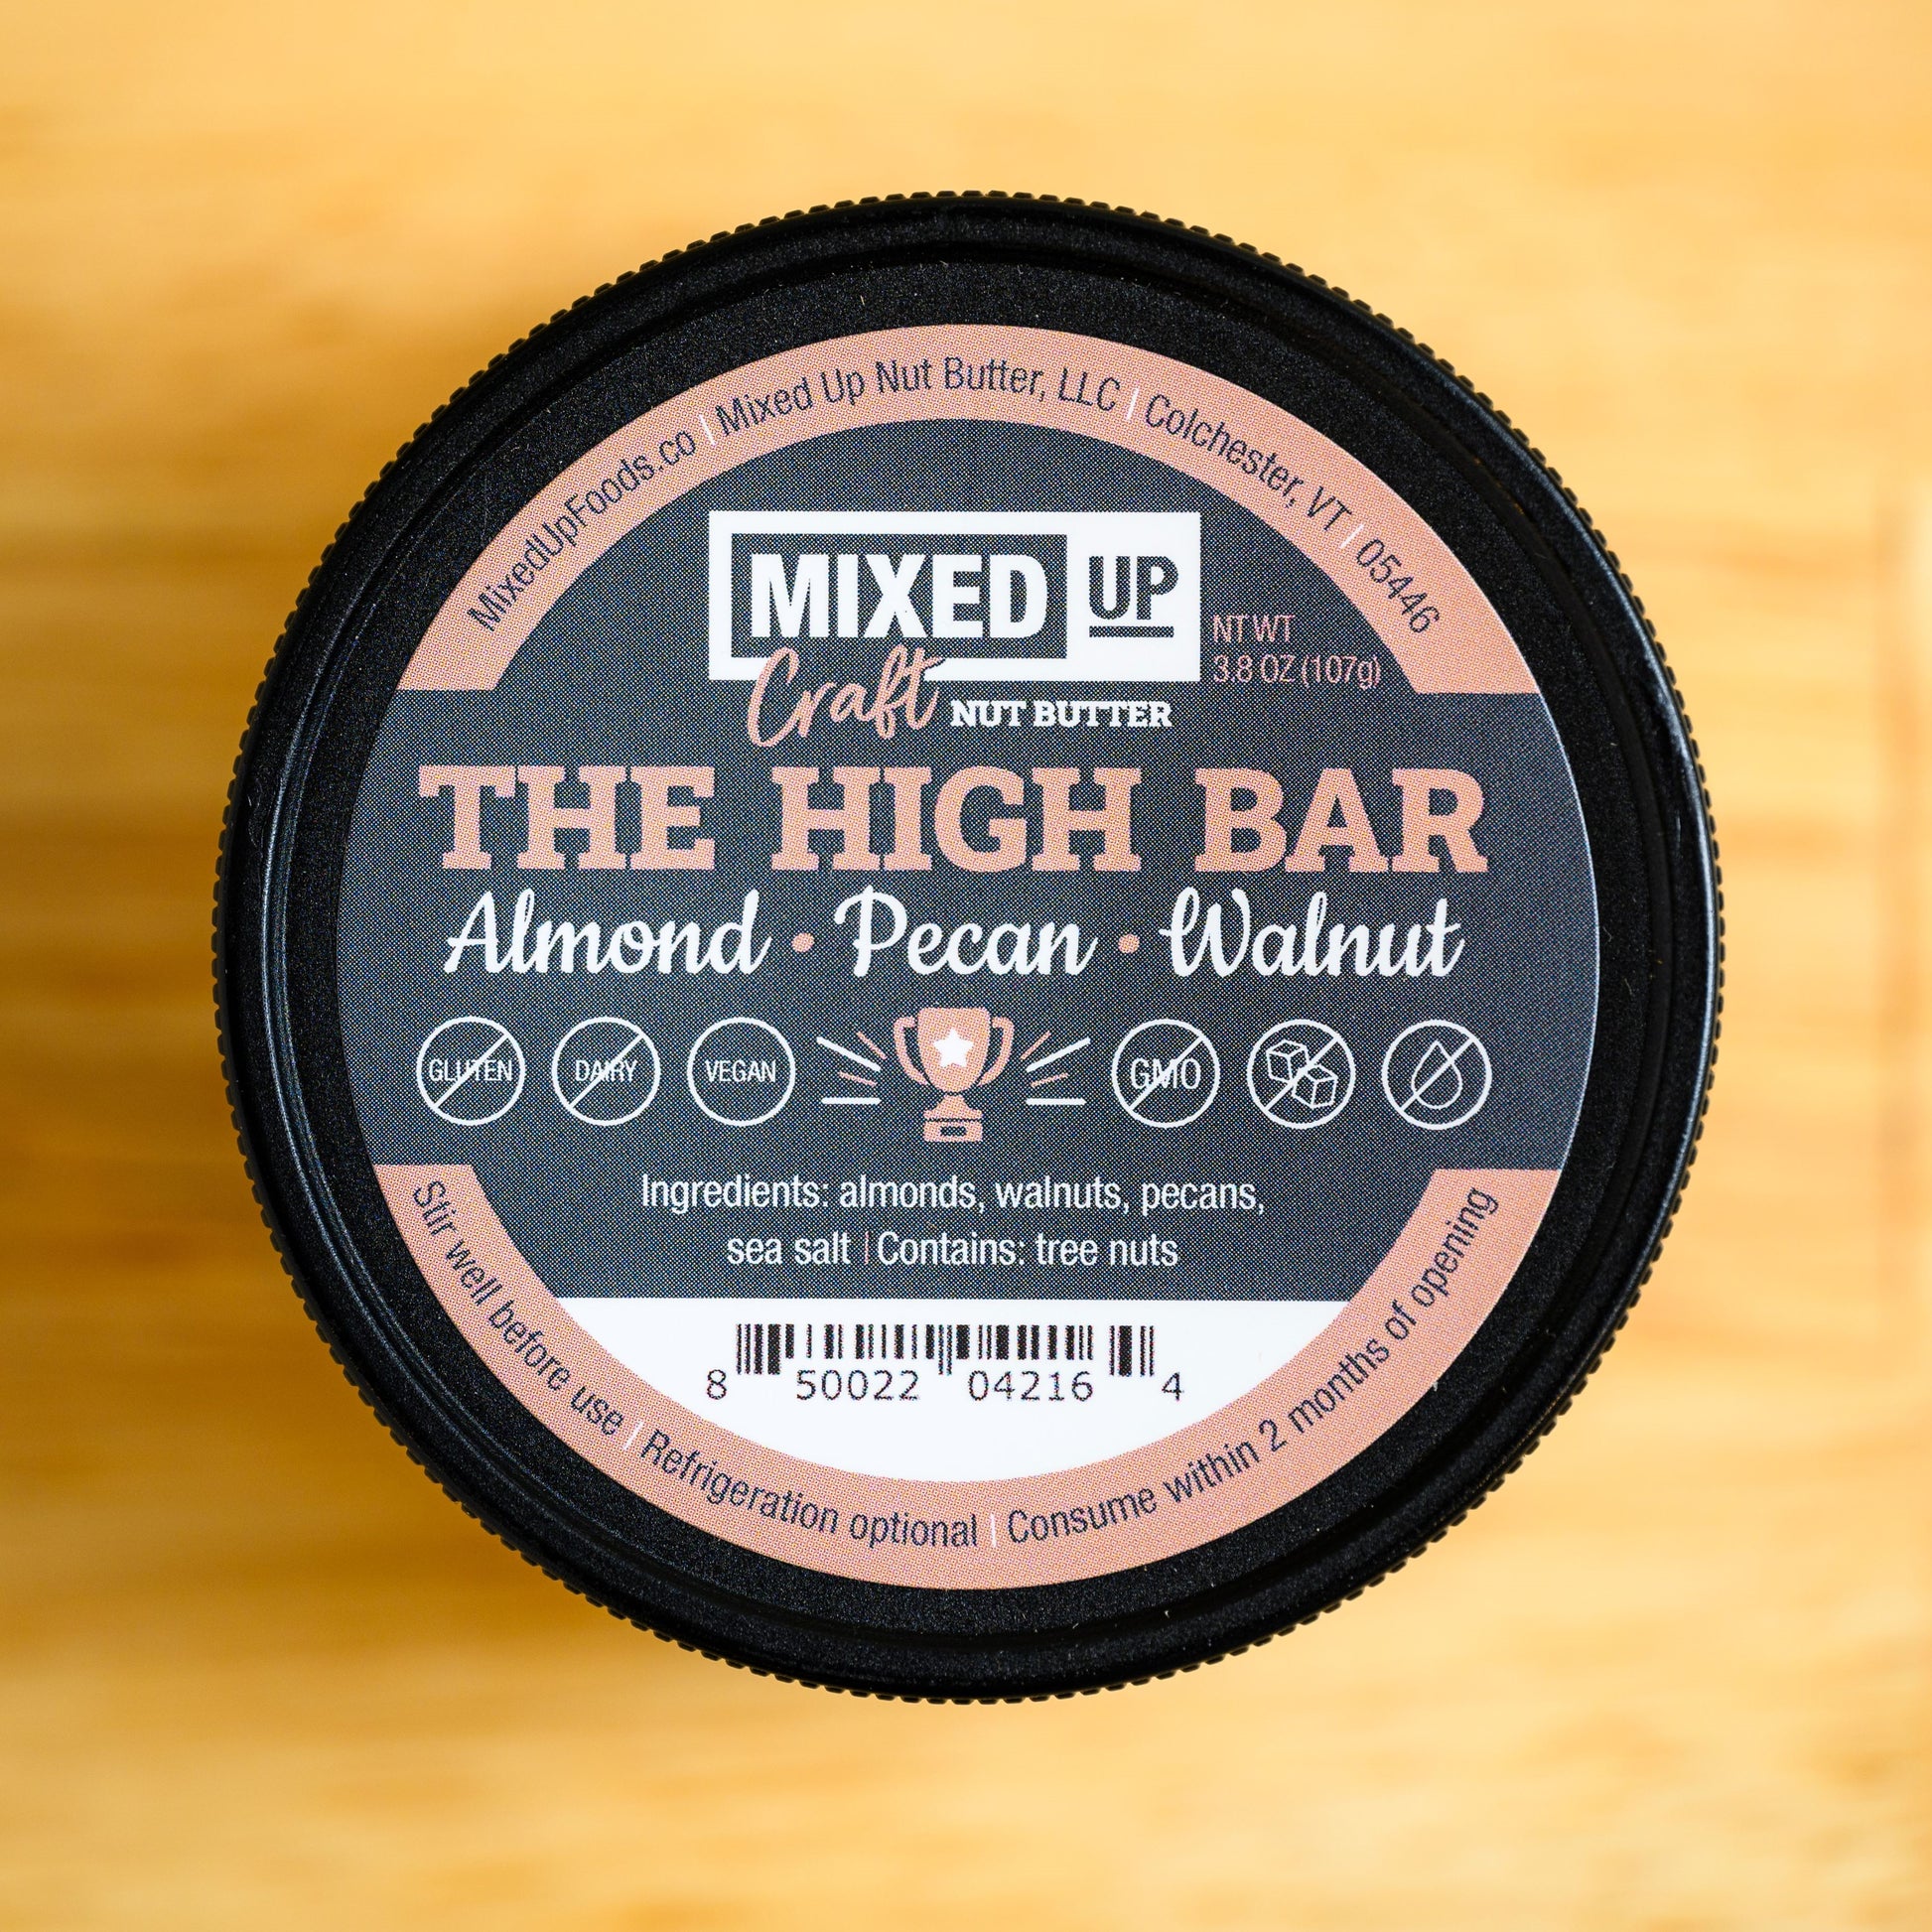 Almond, Pecan, and Walnut Nut Butter - "The High Bar" - 3.8 oz